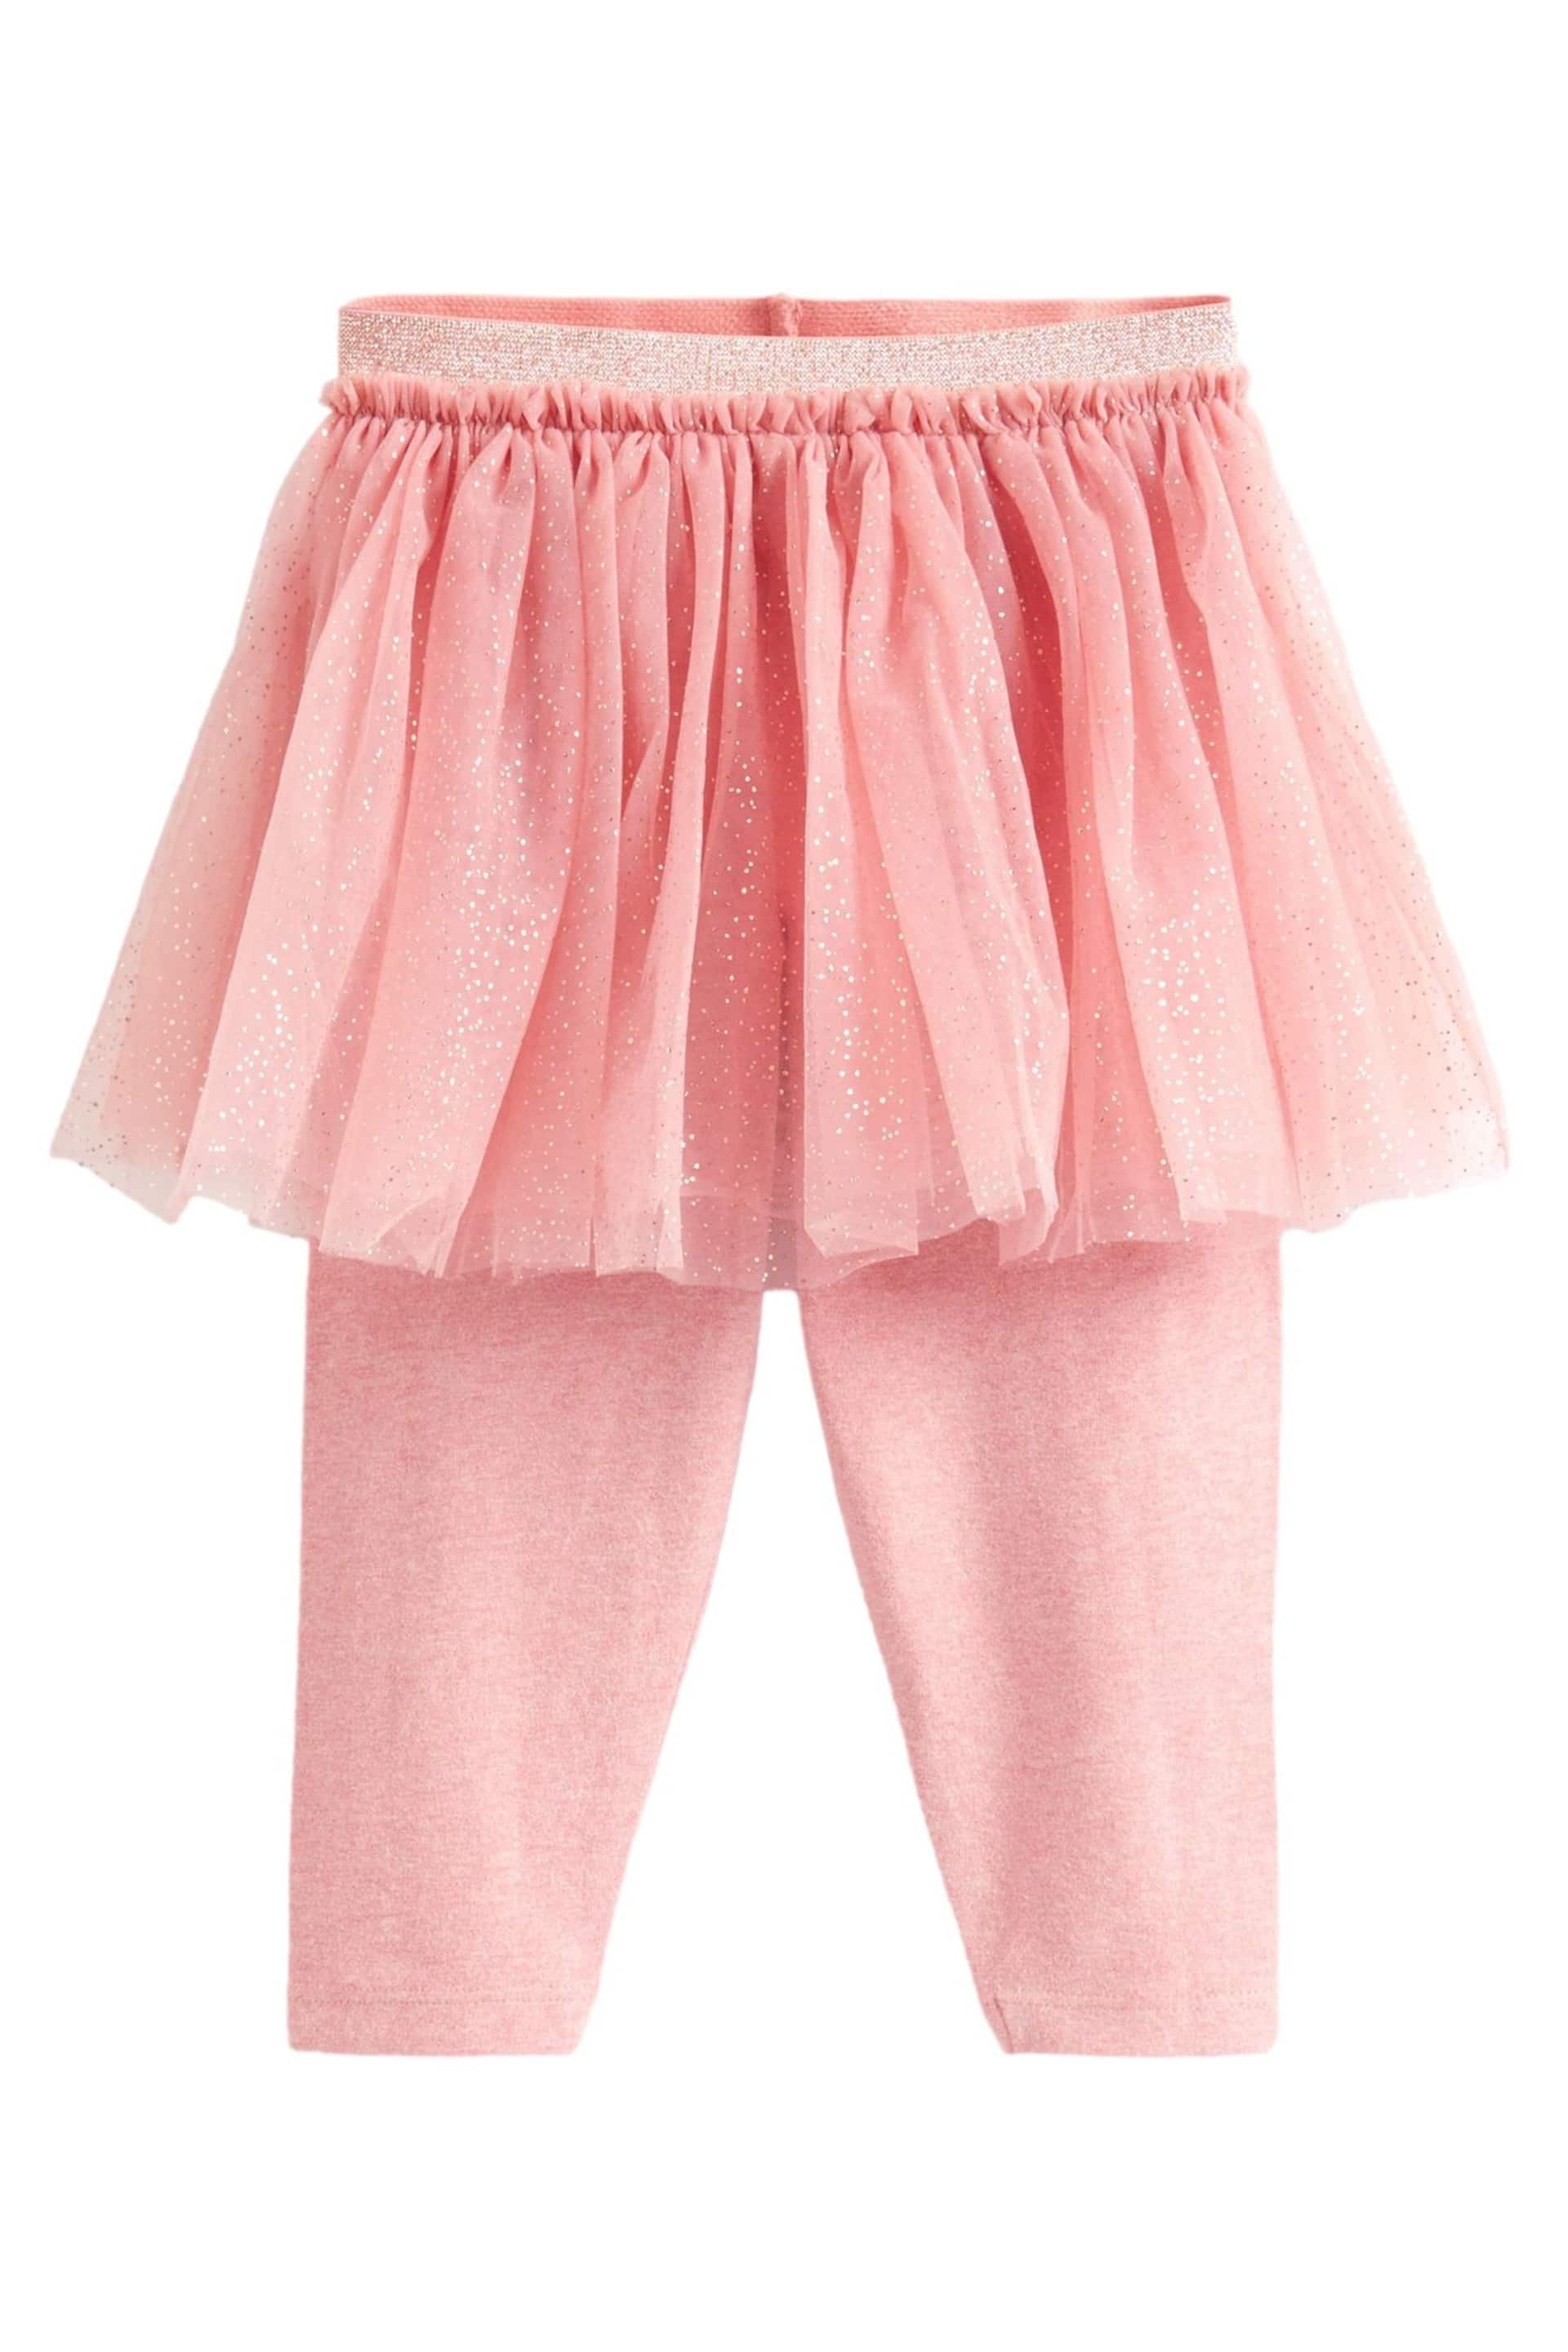 Pink Sparkly Tutu Leggings (3mths-7yrs) - Image 5 of 6